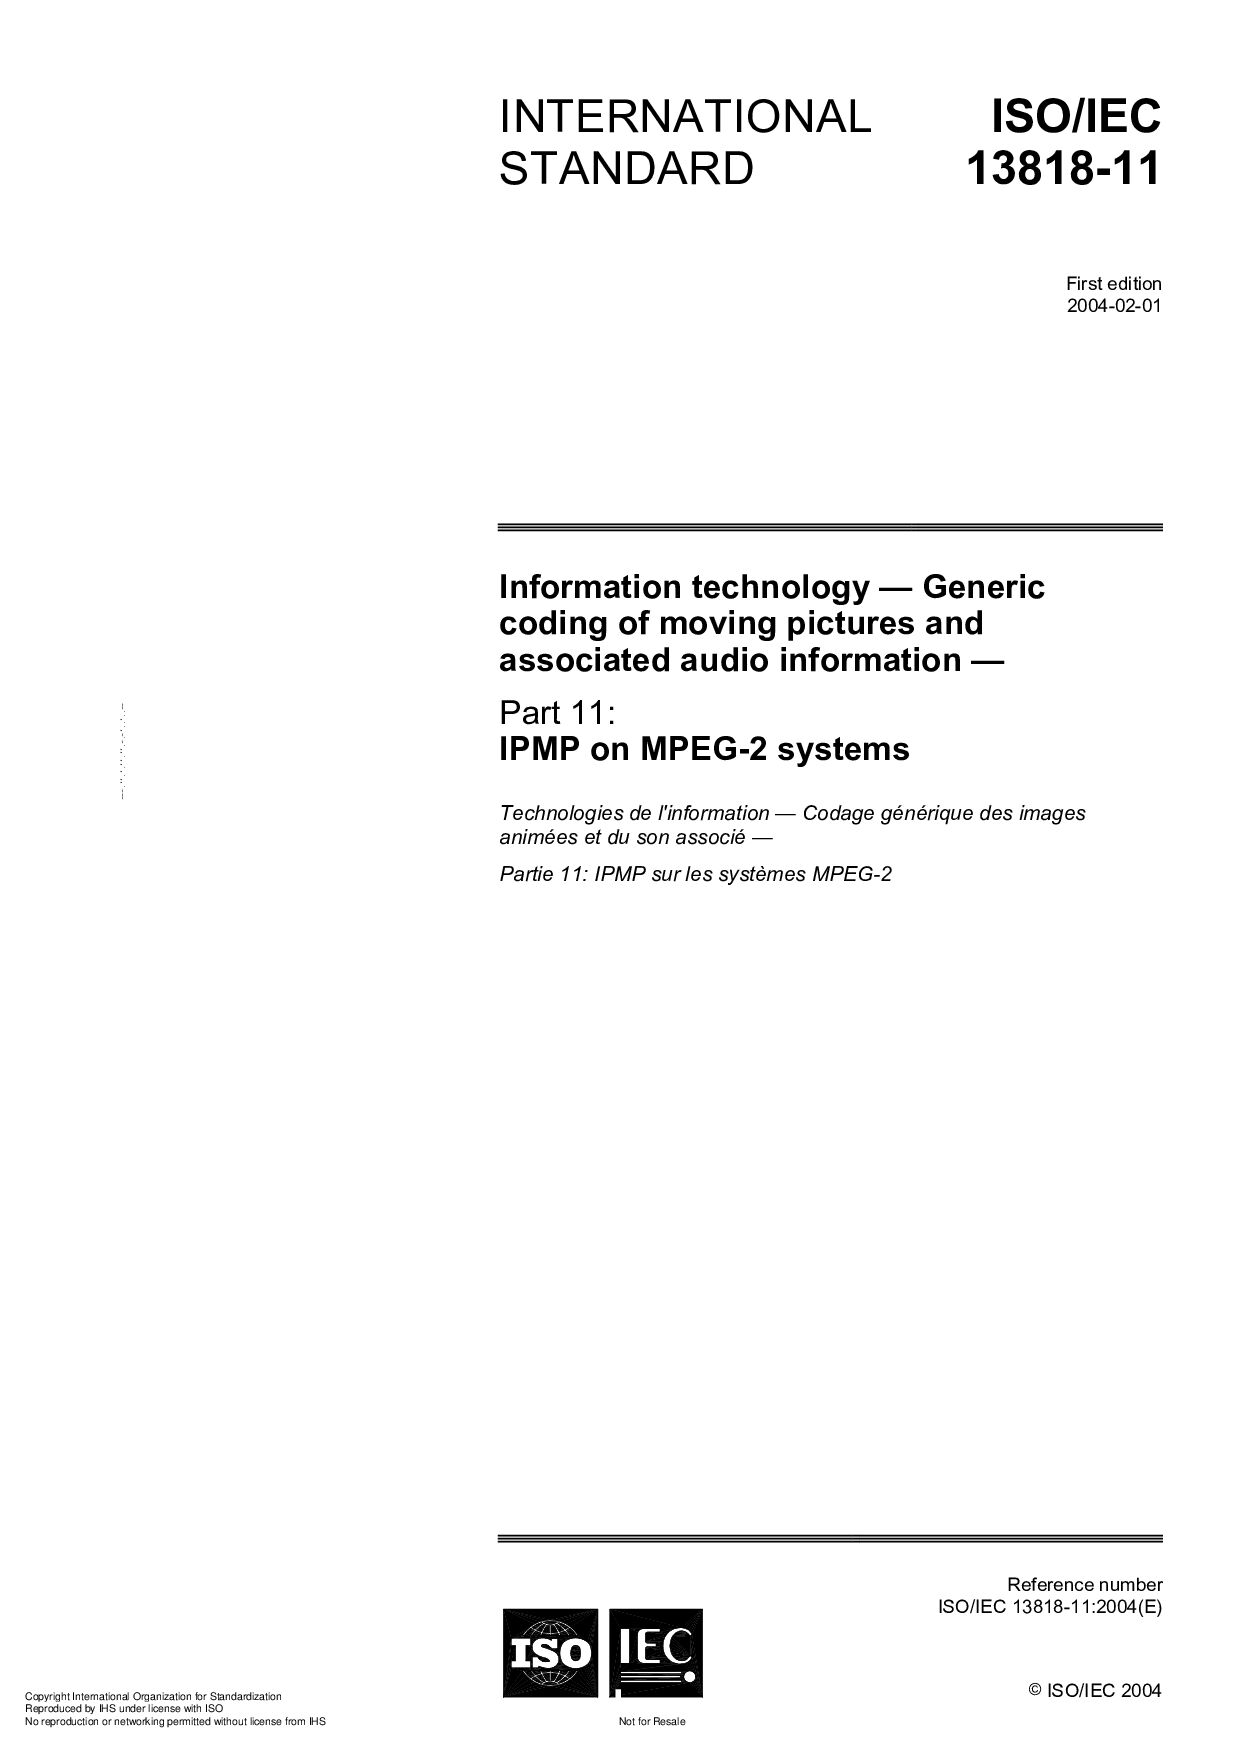 ISO/IEC 13818-11:2004